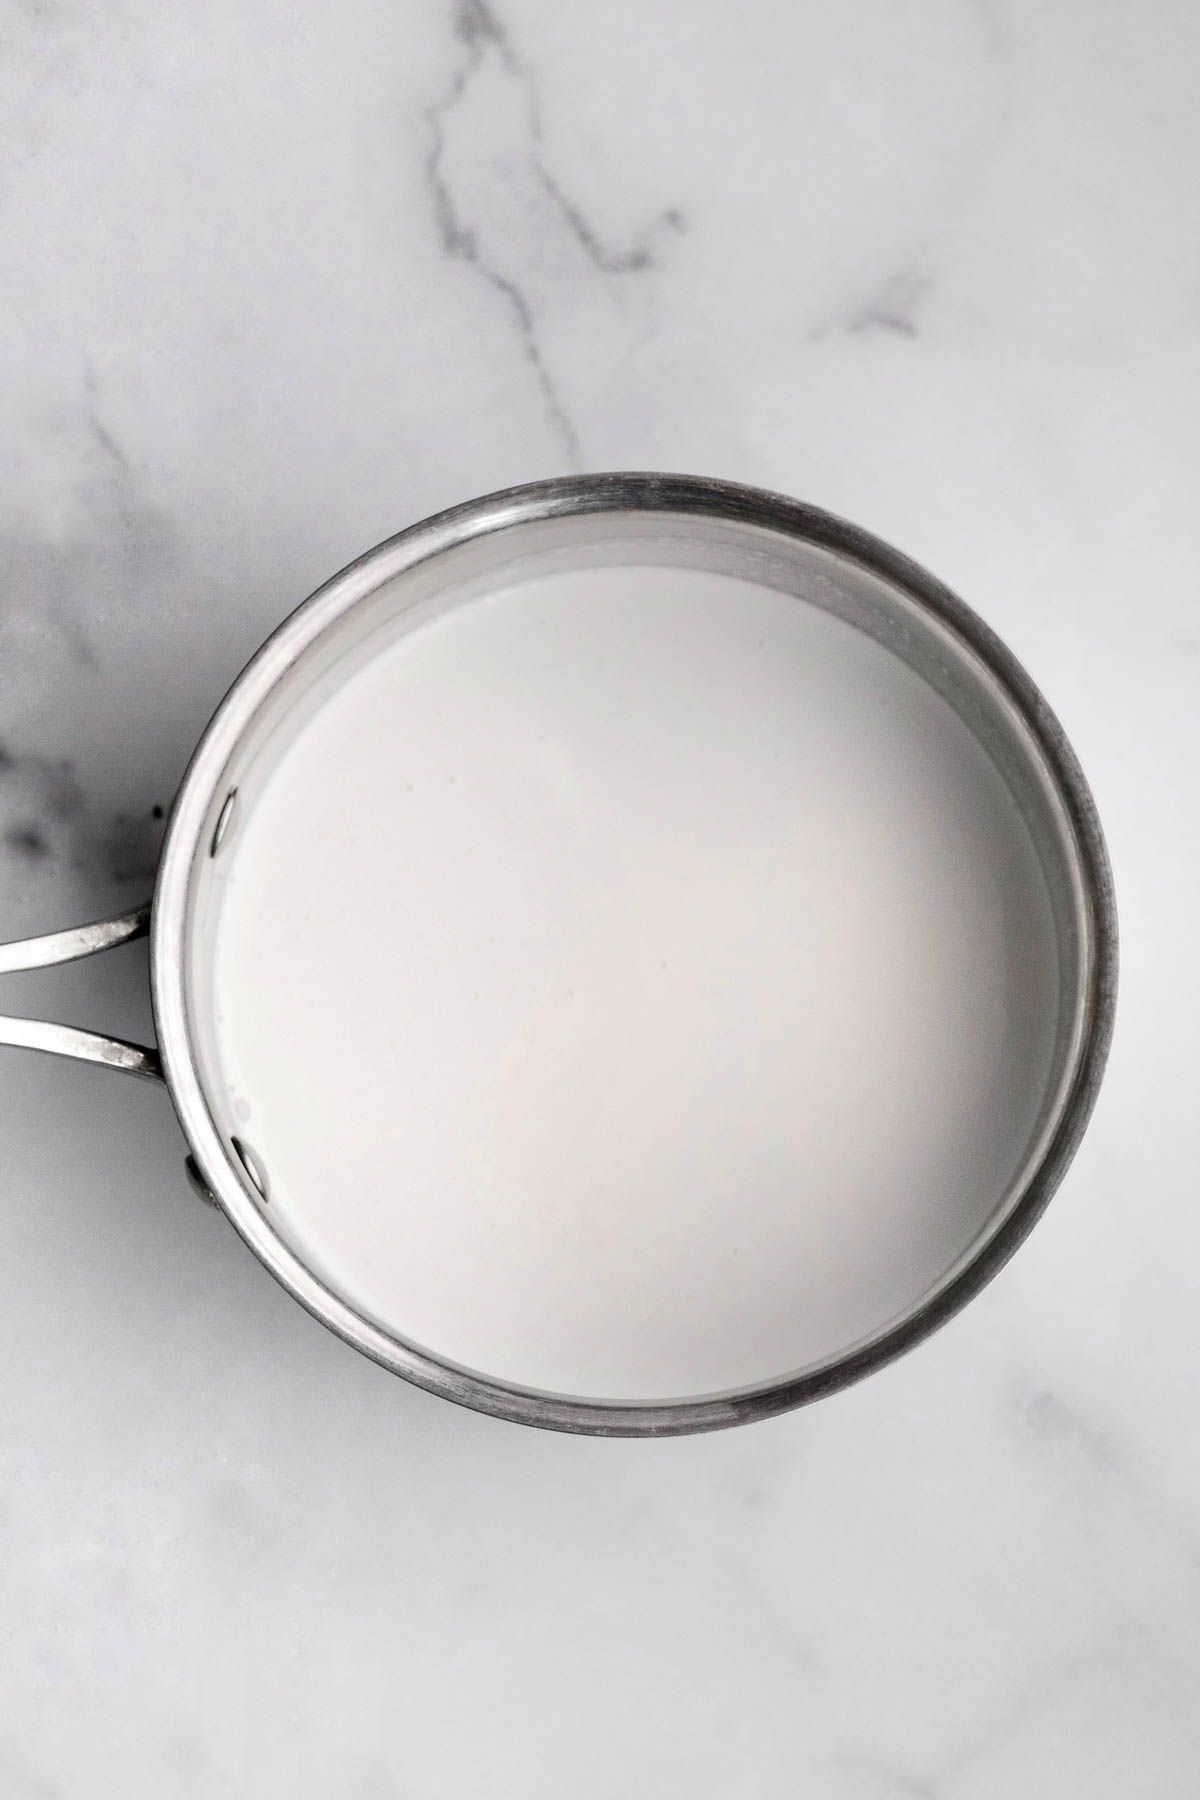 Milk in a saucepan.